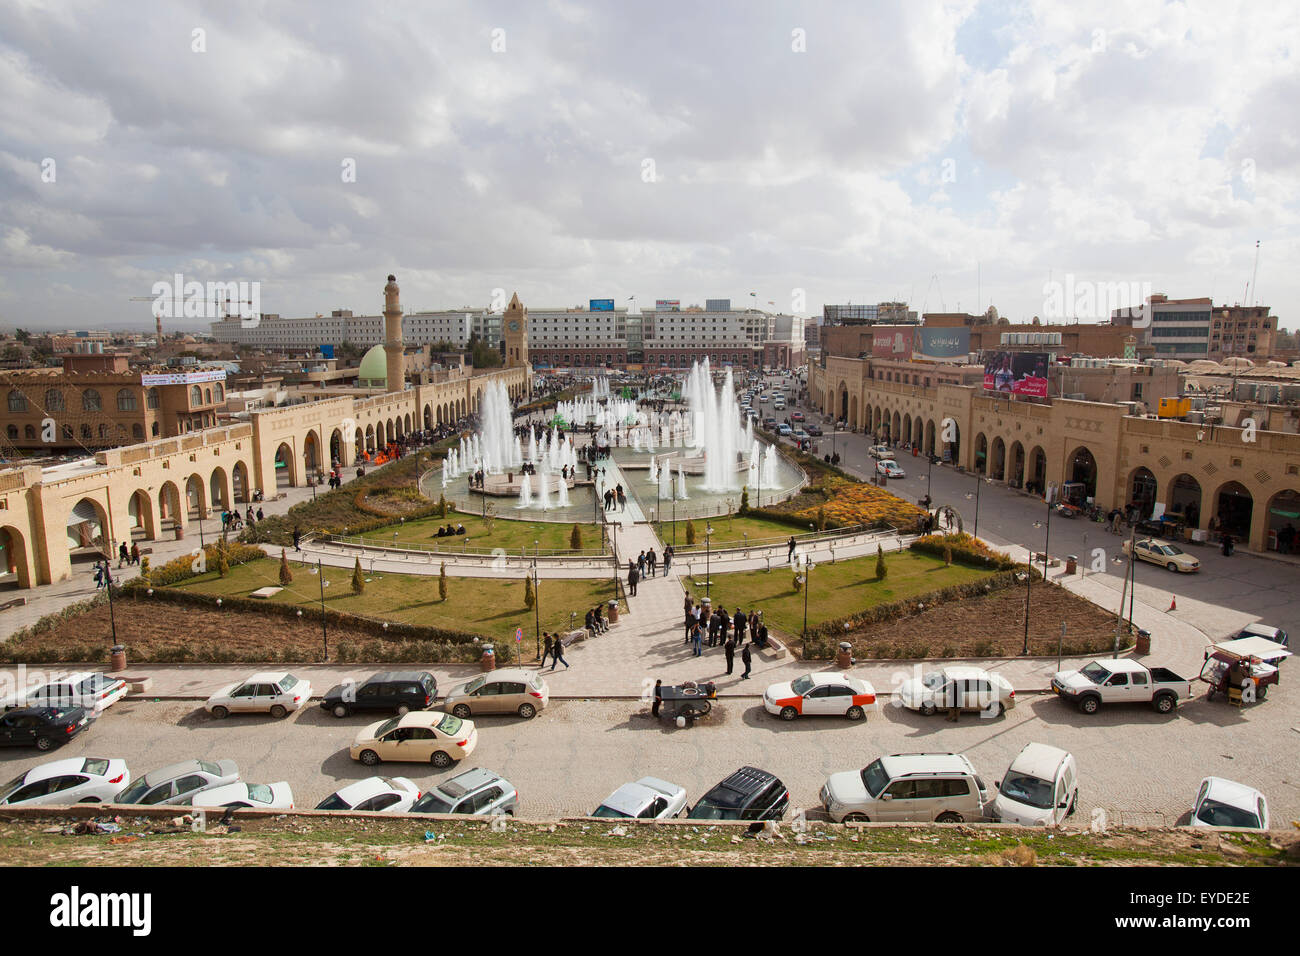 Parki Shar, Or City Park As Seen From The Citadel, Erbil, Iraqi Kurdistan, Iraq Stock Photo